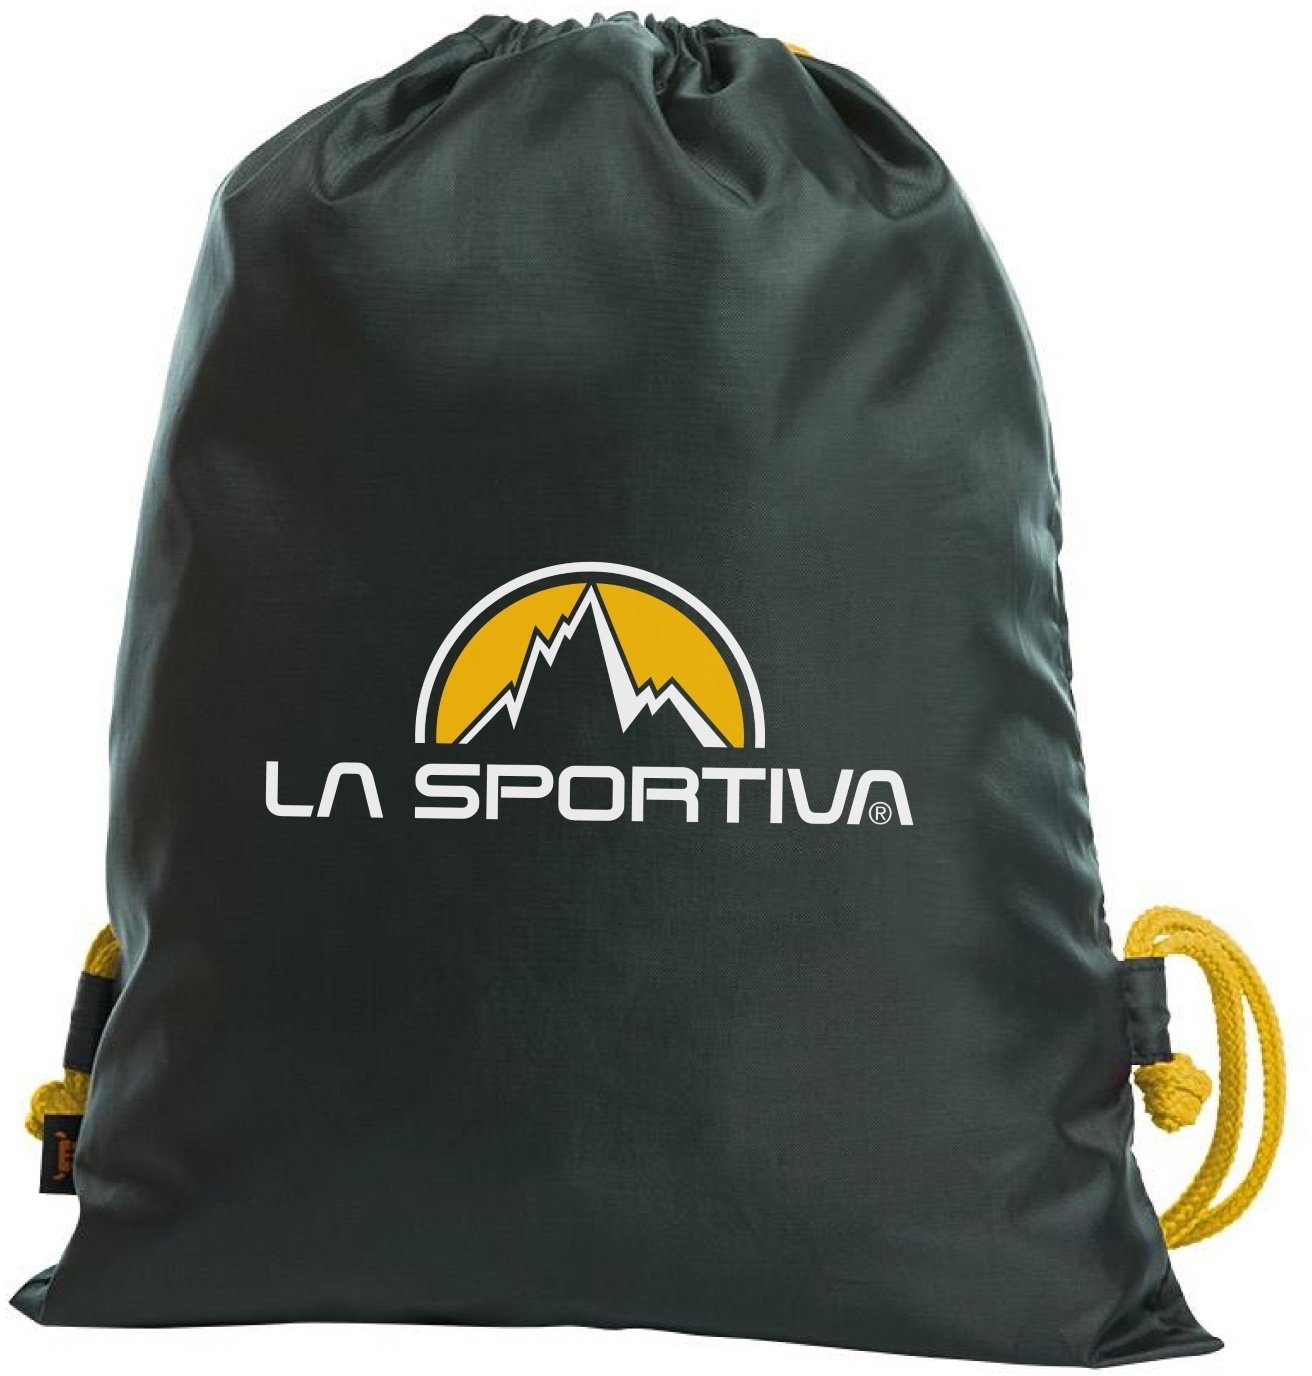 La Sportiva Brand Bag Black